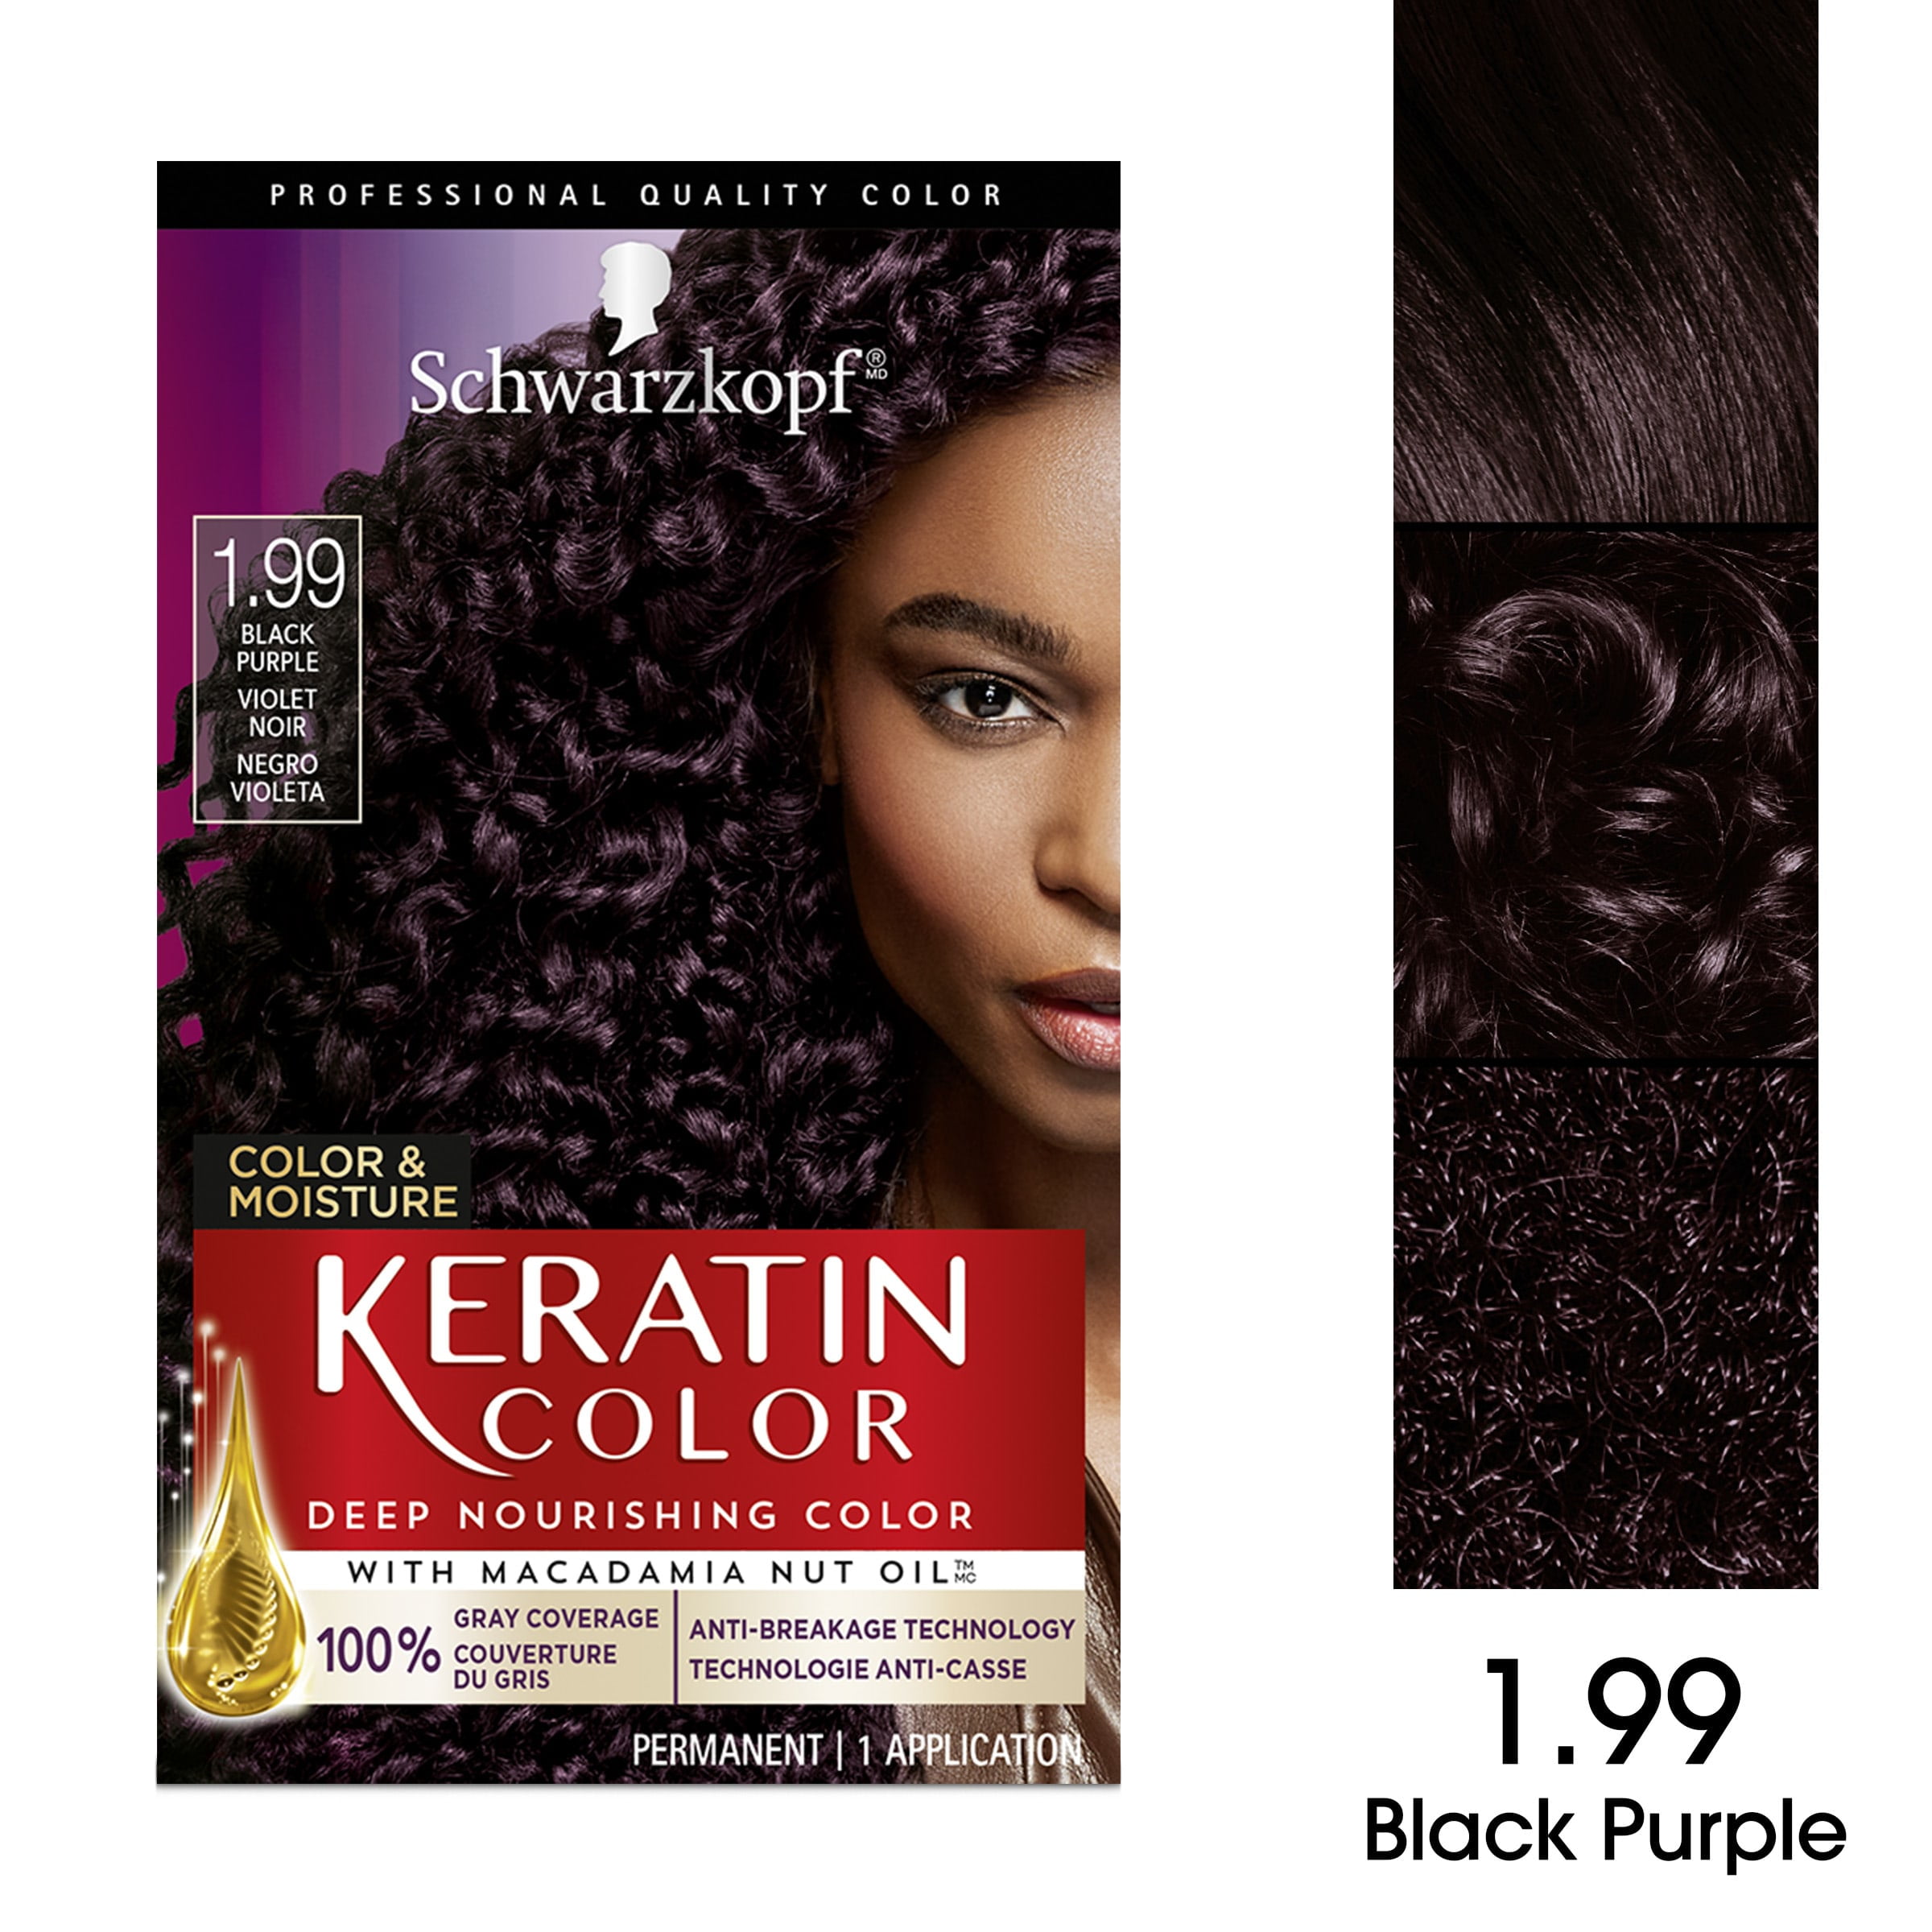 Schwarzkopf Keratin Color, Color & Moisture Permanent Hair Color Cream, 1.99 Black Purple